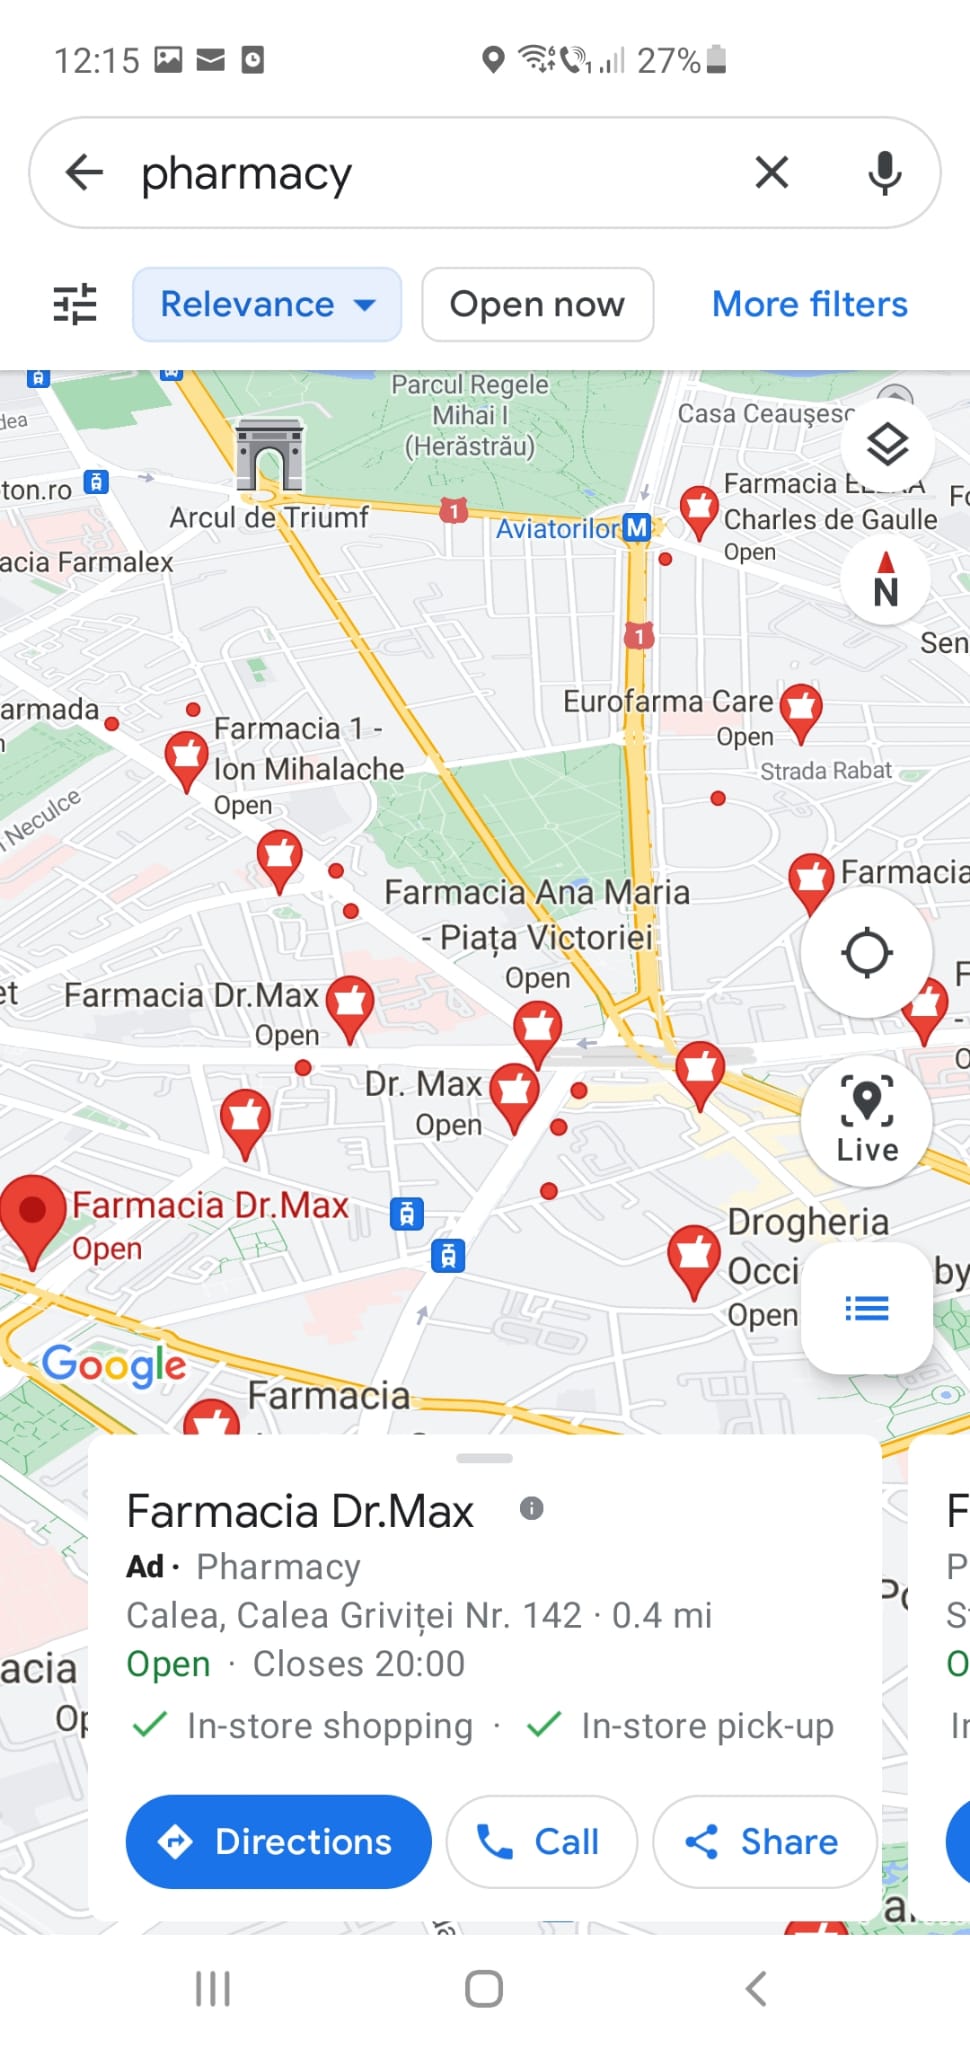 geofencing screenshot example - location based marketing - pharmacy